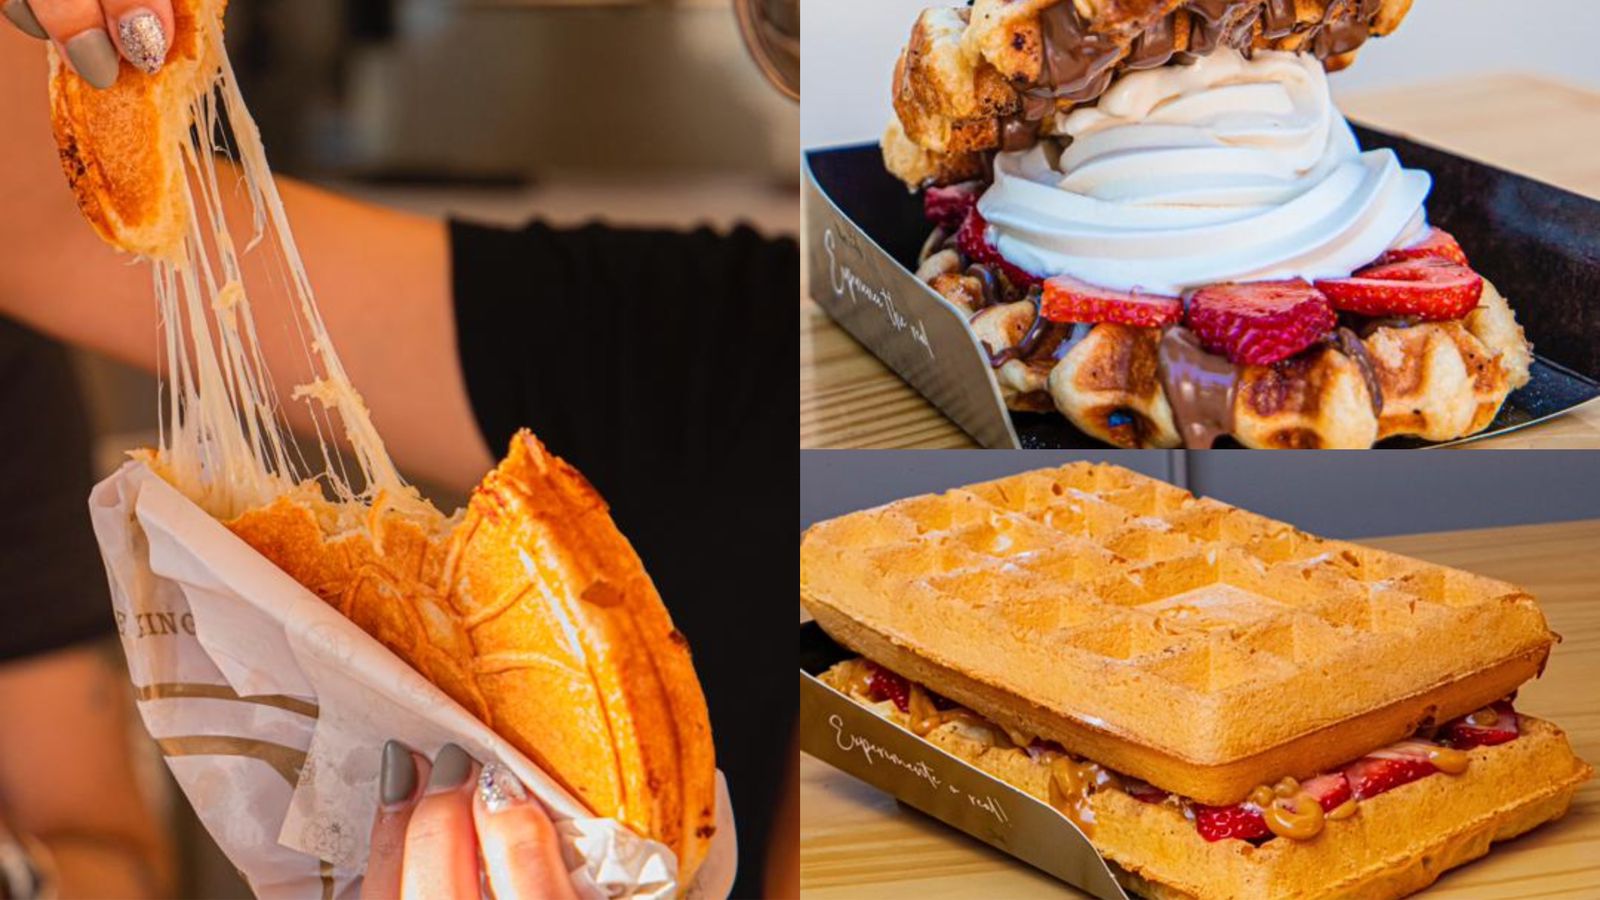 The Waffle King renova cardápio com waffle de hambúrguer com cheddar e bacon